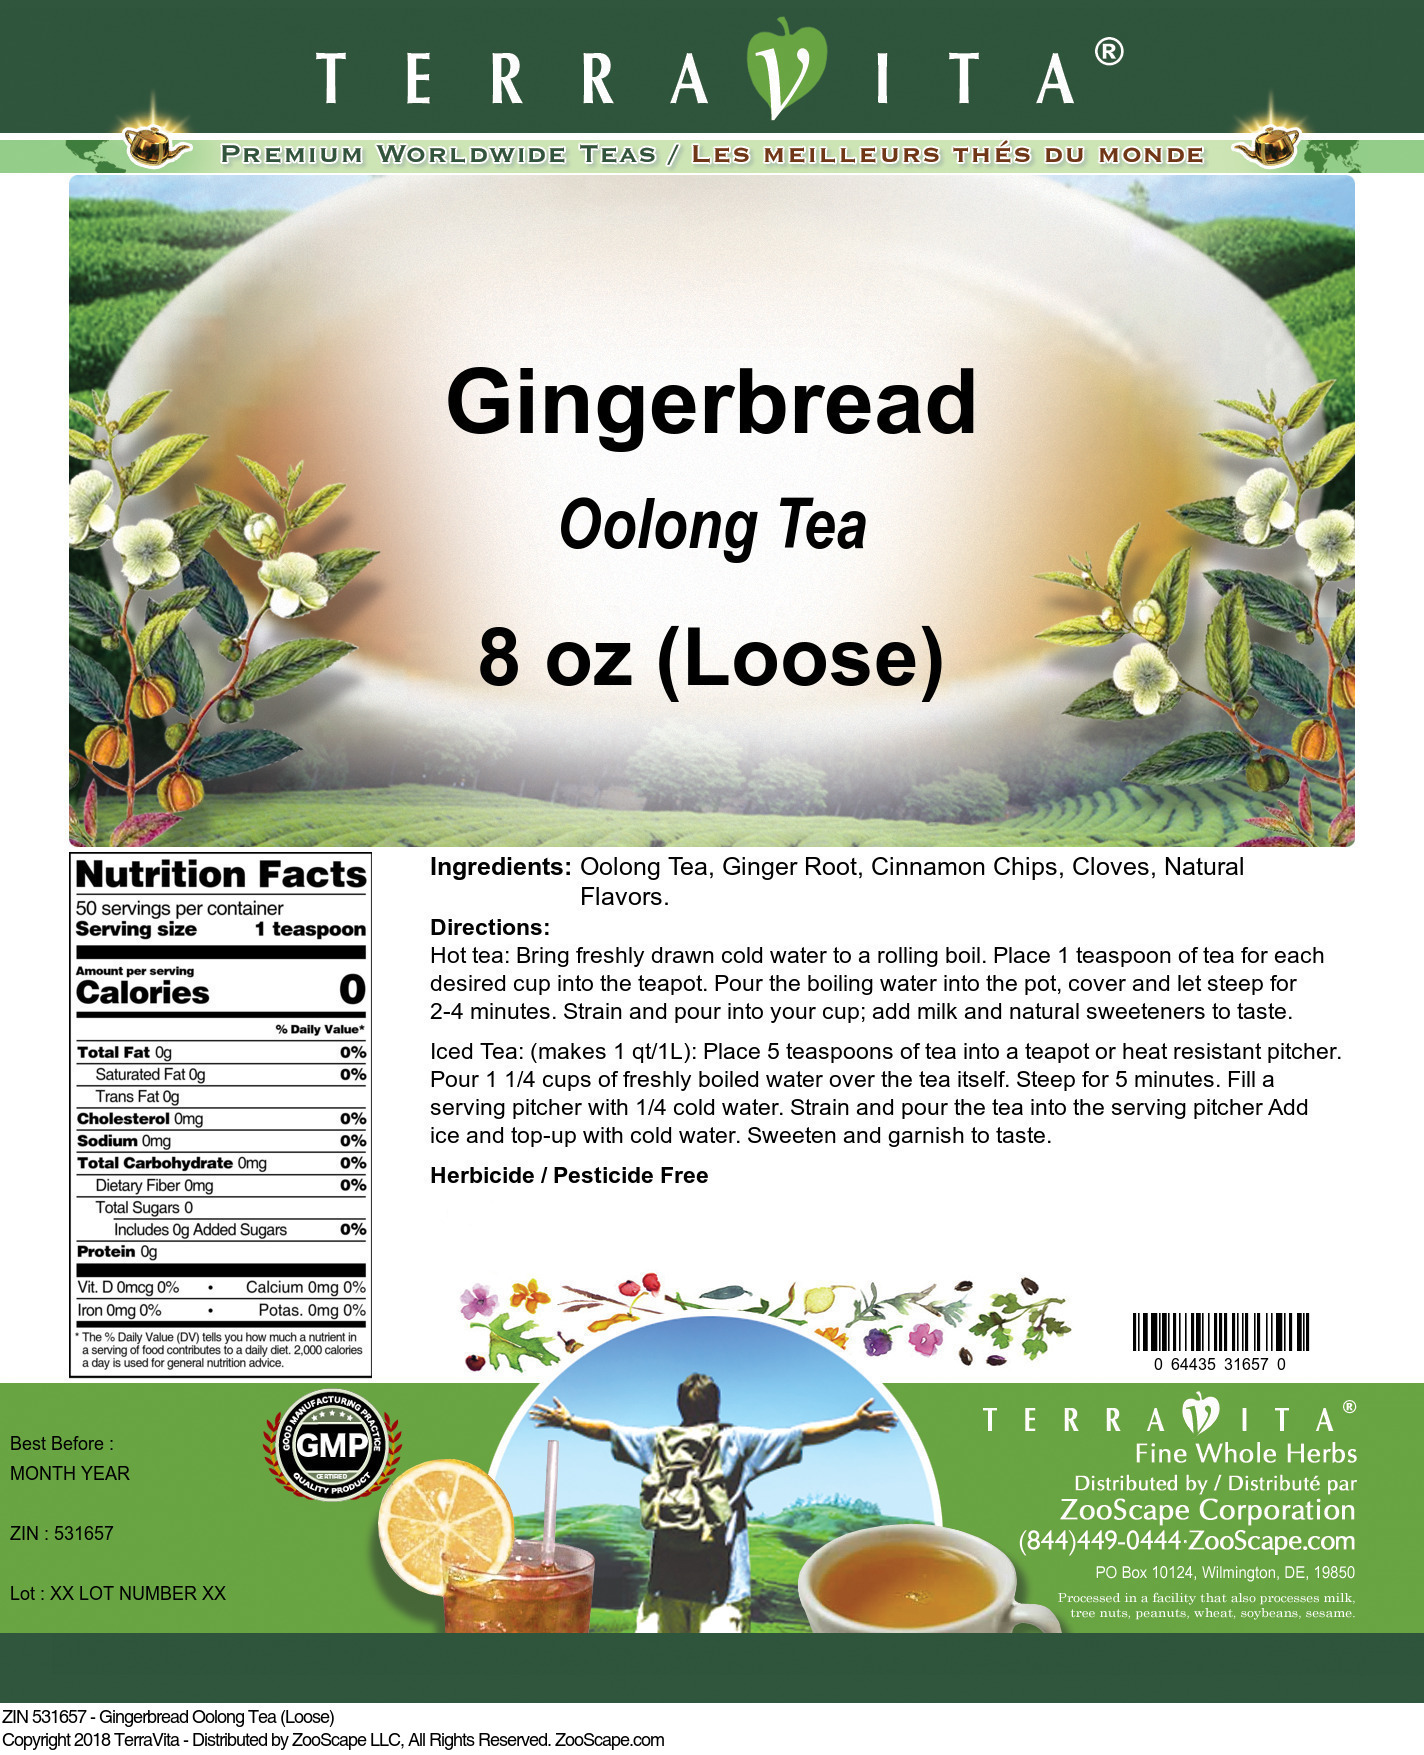 Gingerbread Oolong Tea (Loose) - Label